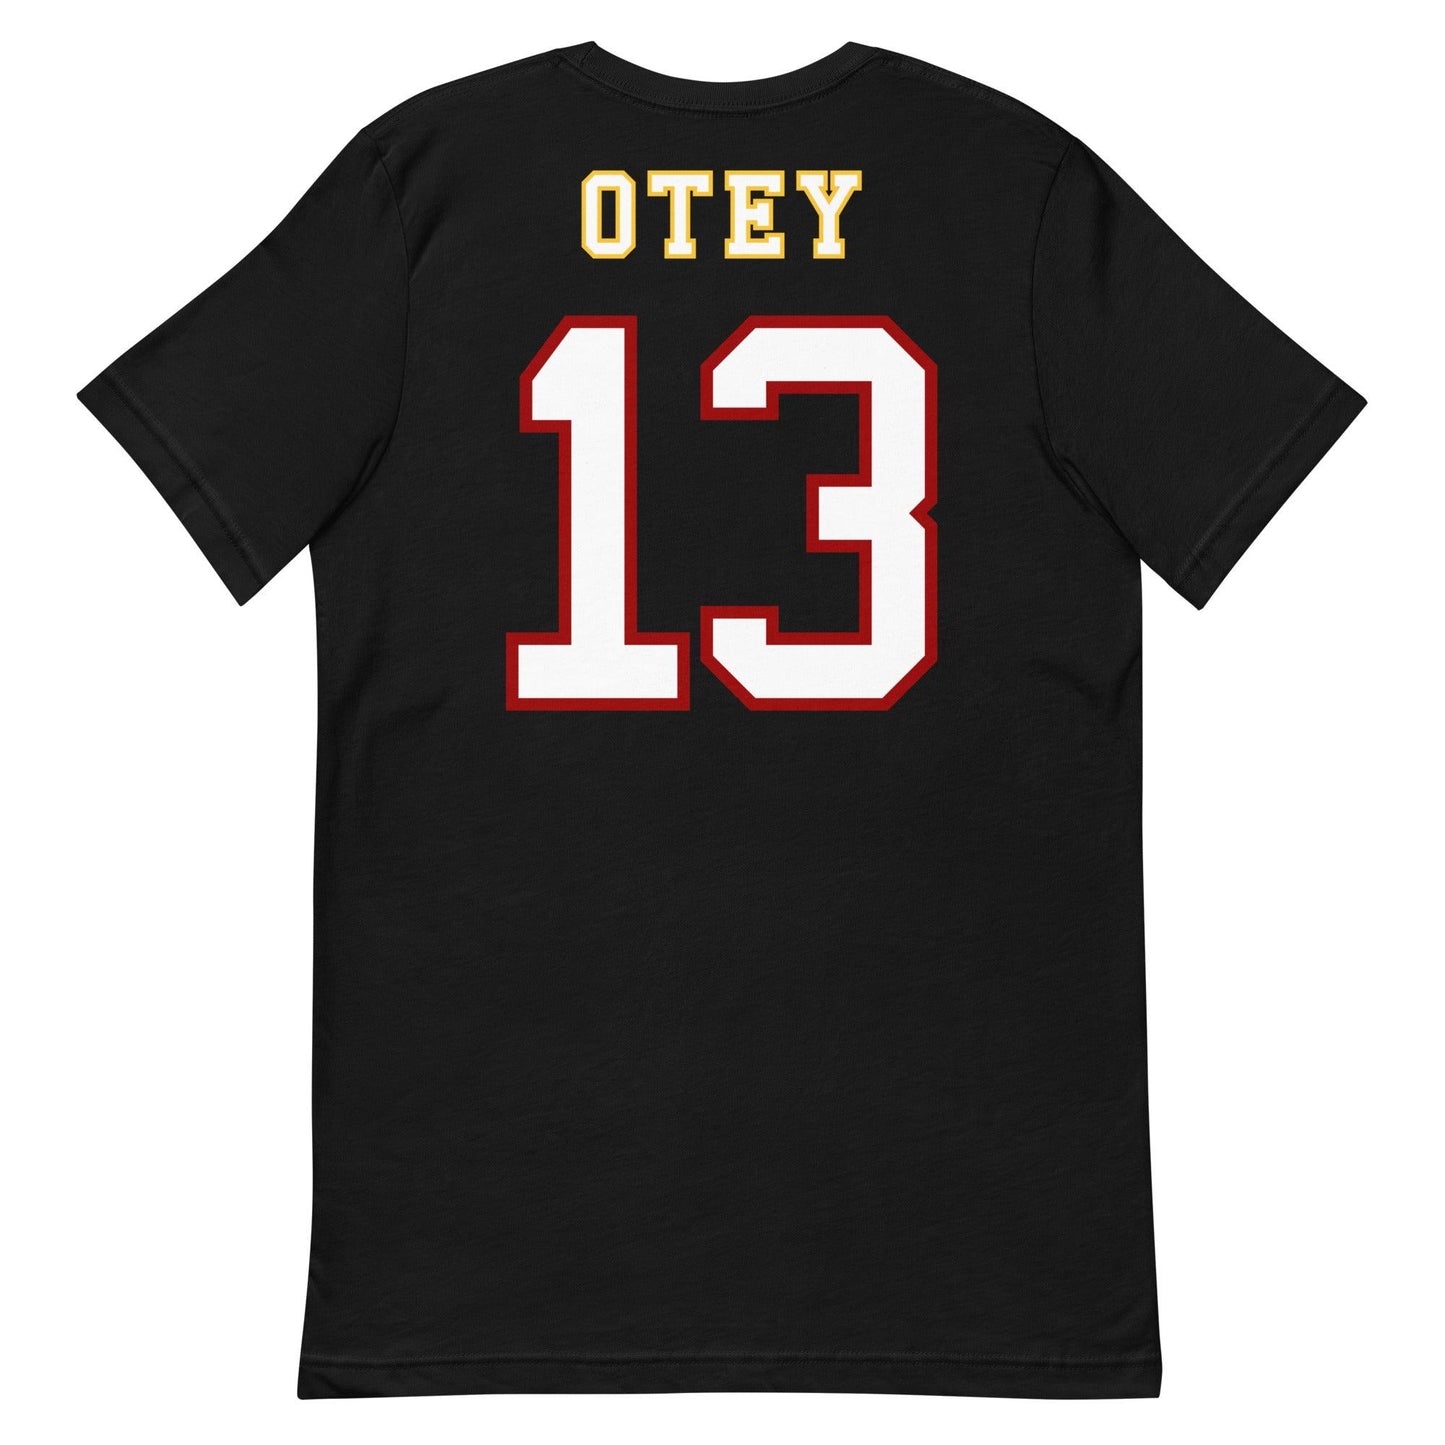 Adonis Otey "Jersey" t-shirt - Fan Arch